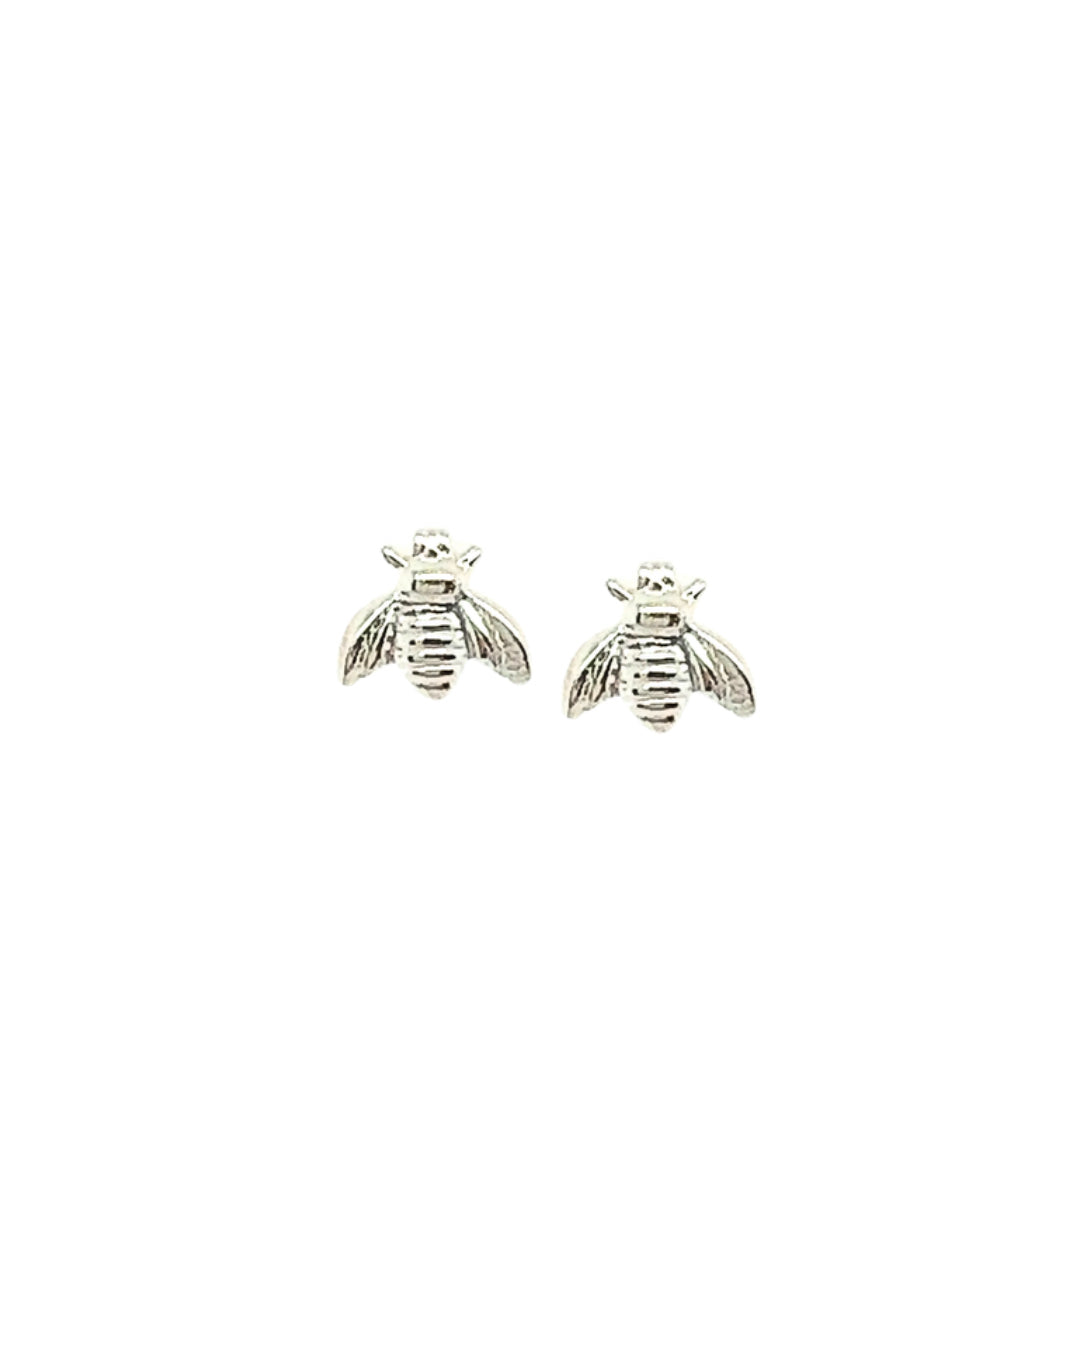 Sterling silver honey bee stud post earrings with butterfly backs